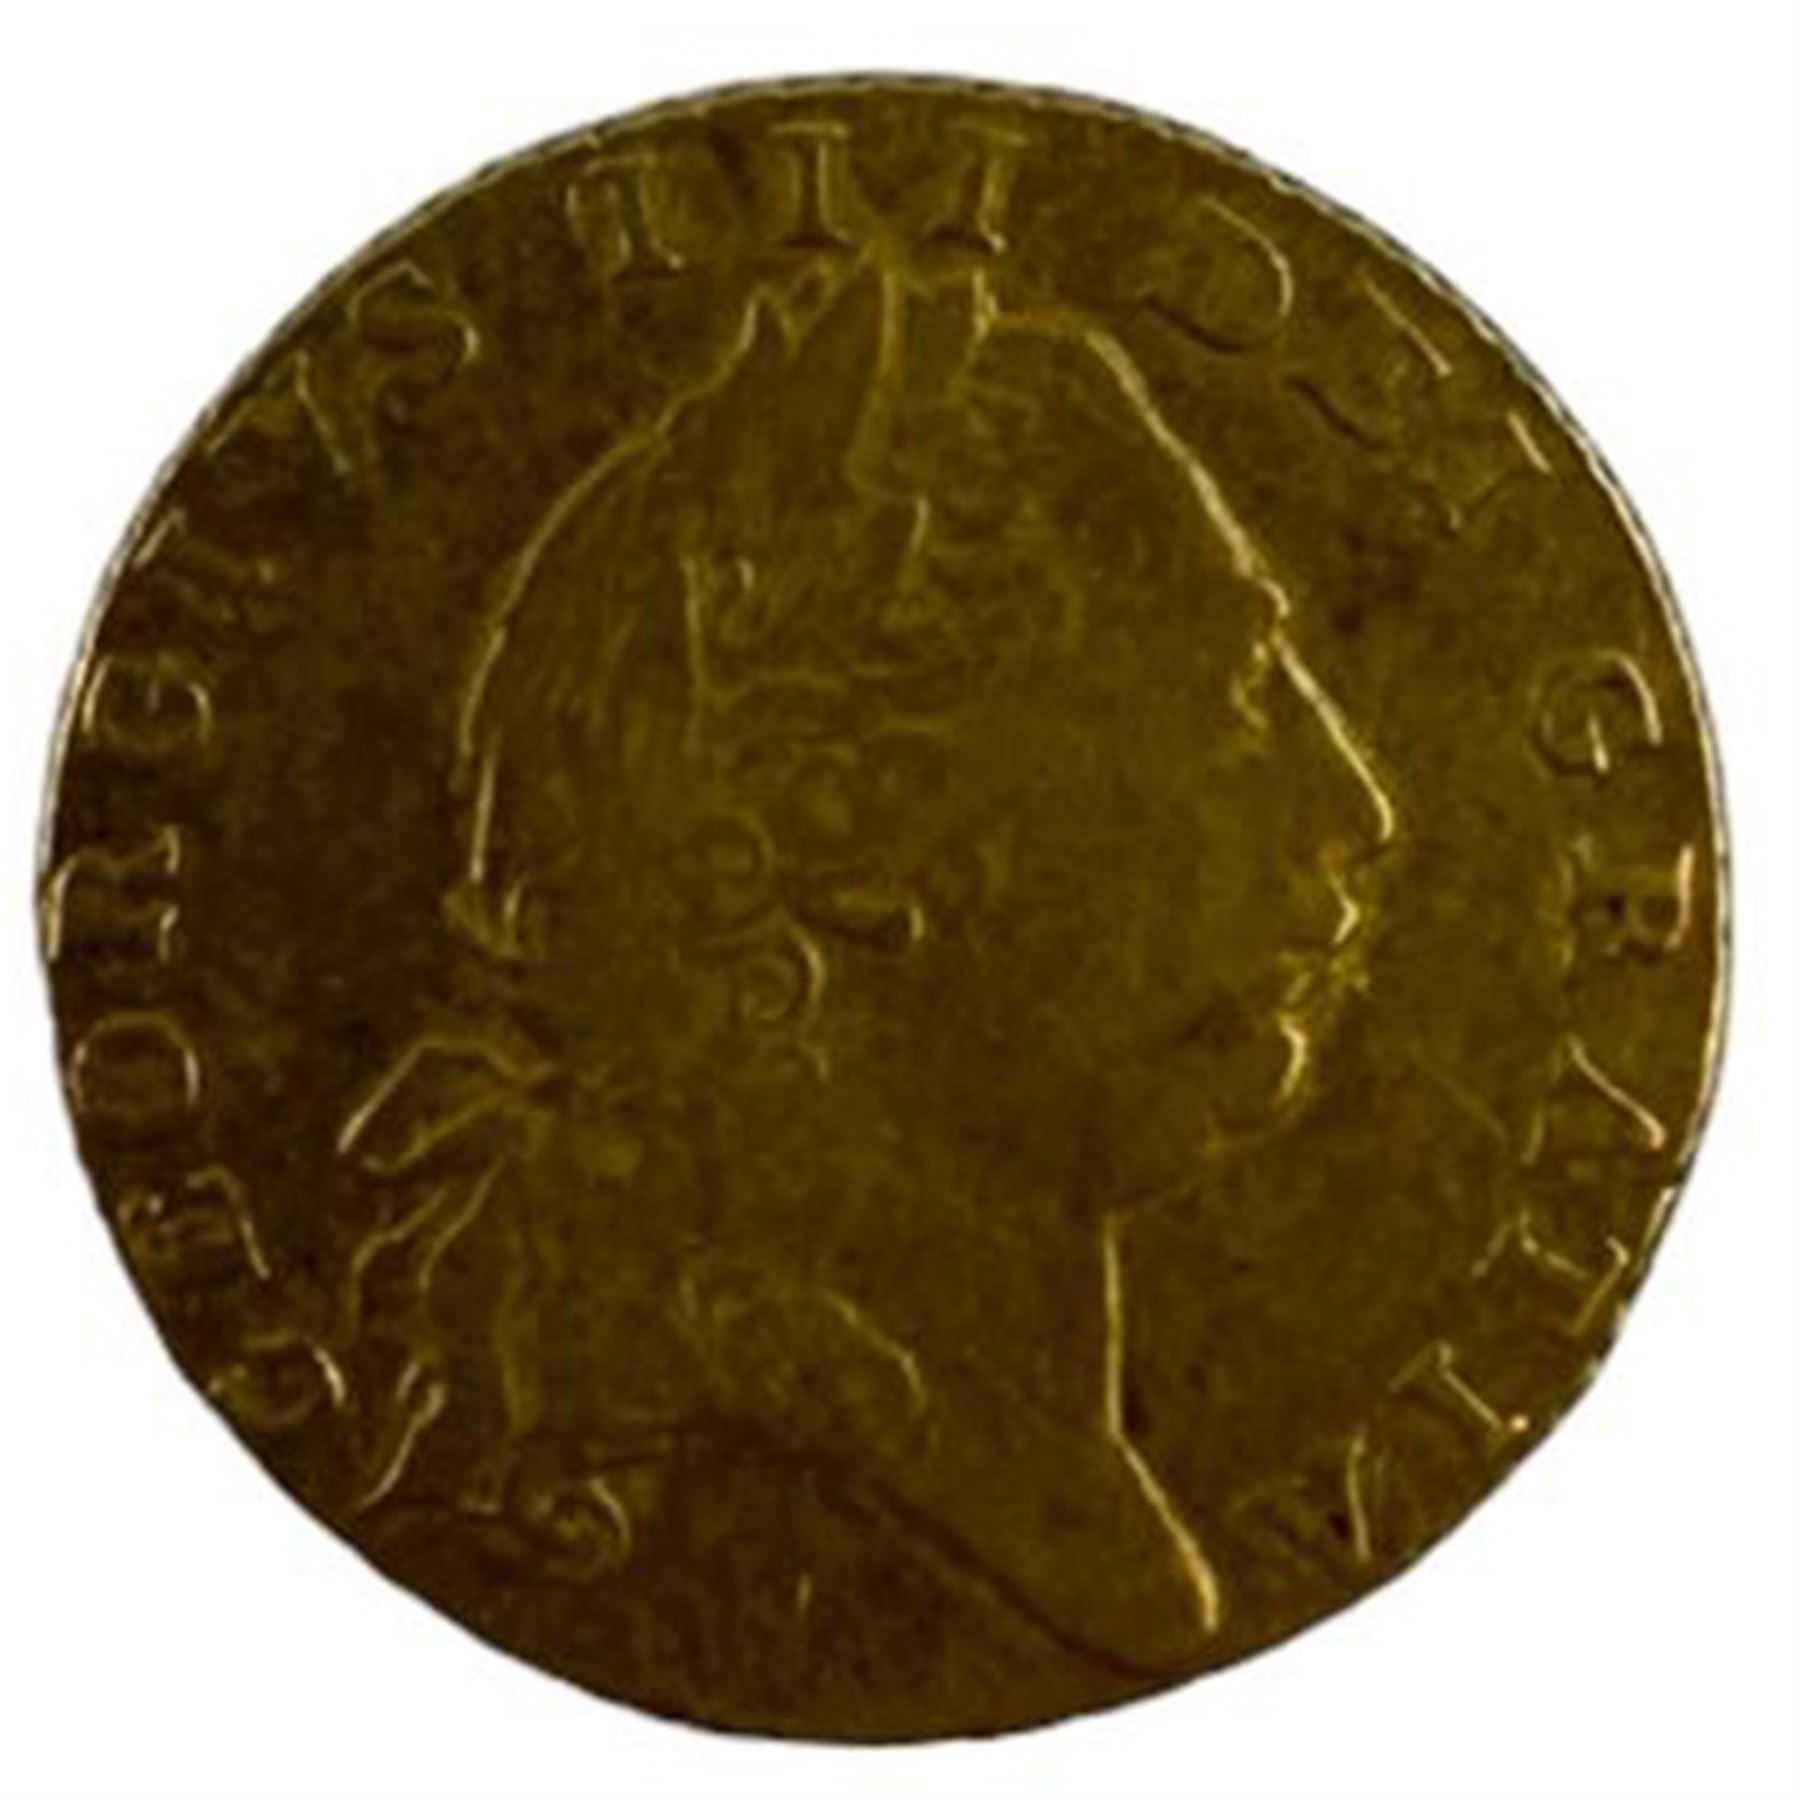 George III 1802 gold half Guinea coin - Image 2 of 2